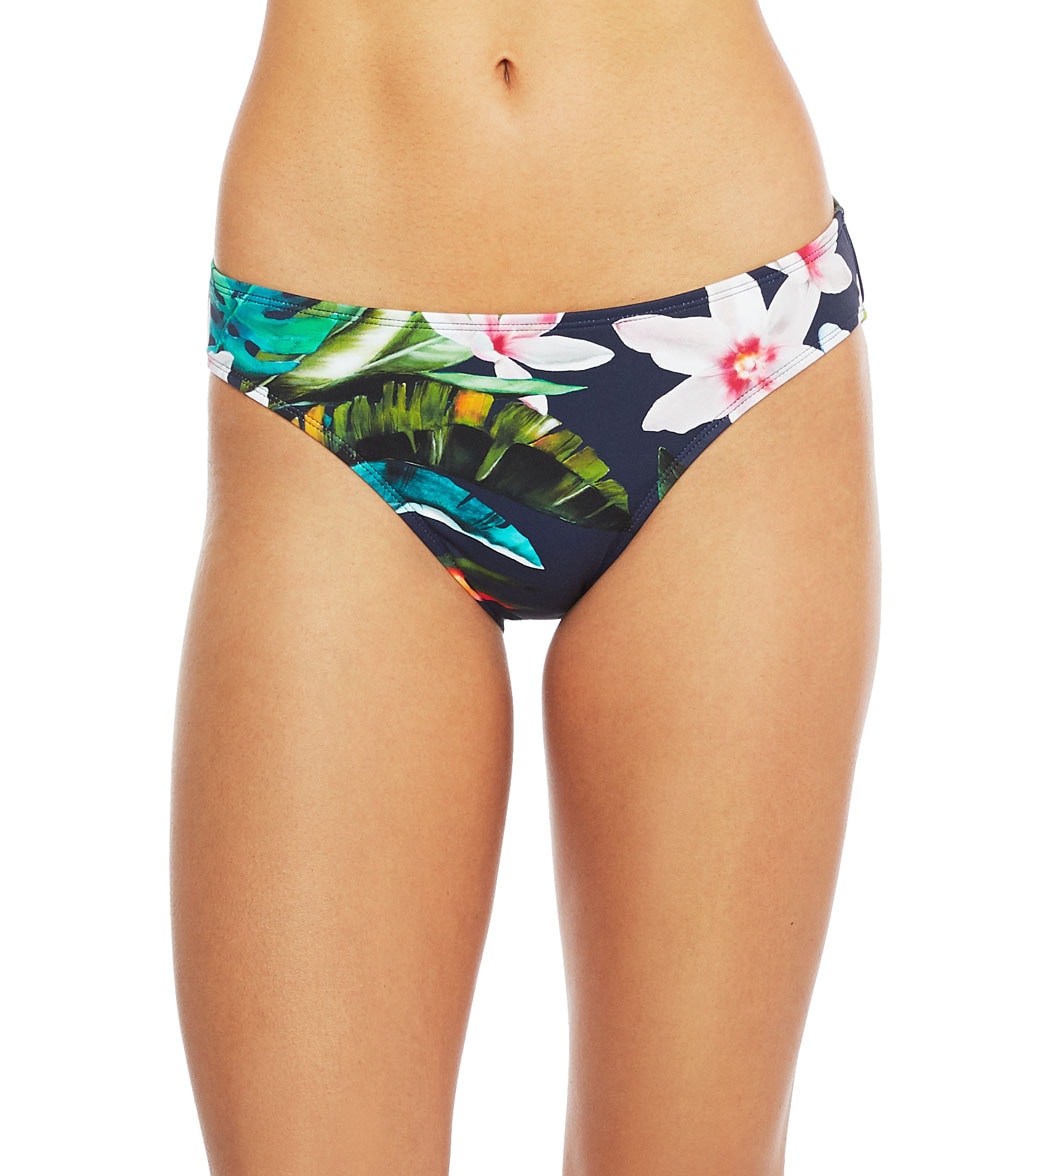 Ralph Lauren Watercolor Tropical Bikini Bottom - Green/Multi 6 - Swimoutlet.com